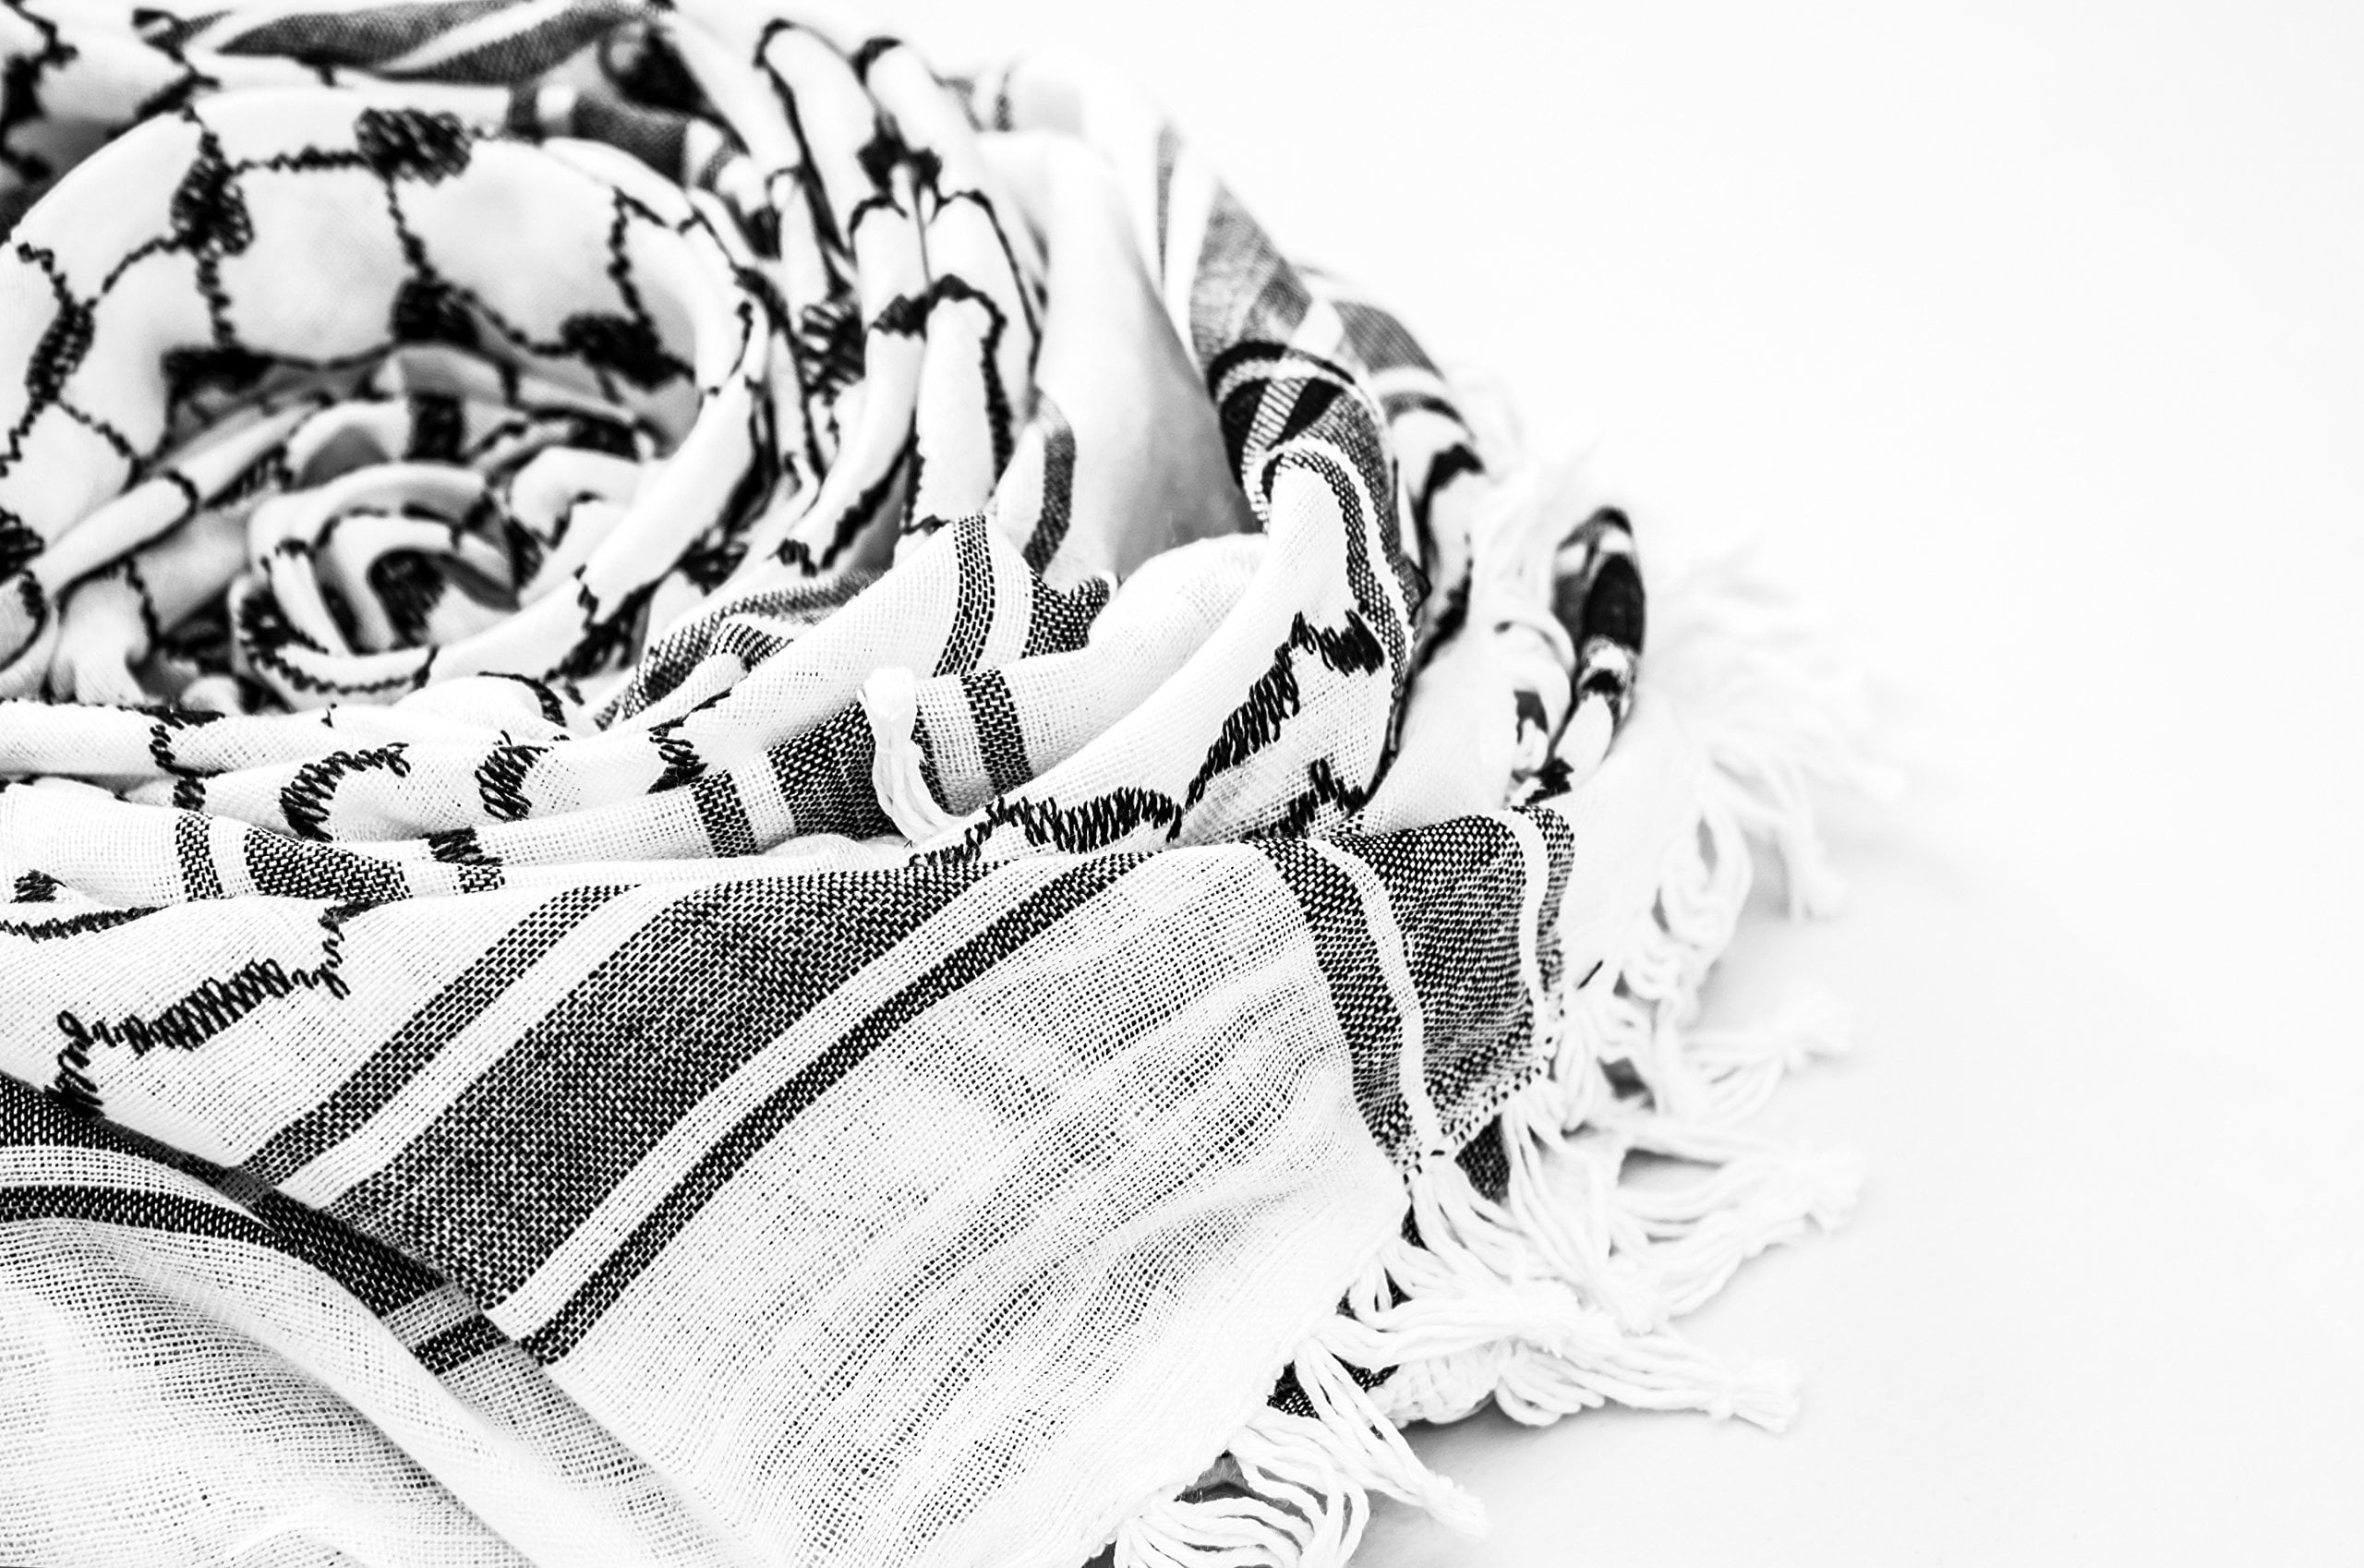 Hirbawi Premium Arabic Scarf 100% Cotton Shemagh Keffiyeh 47x47 Arab Scarf Made in Palestine 